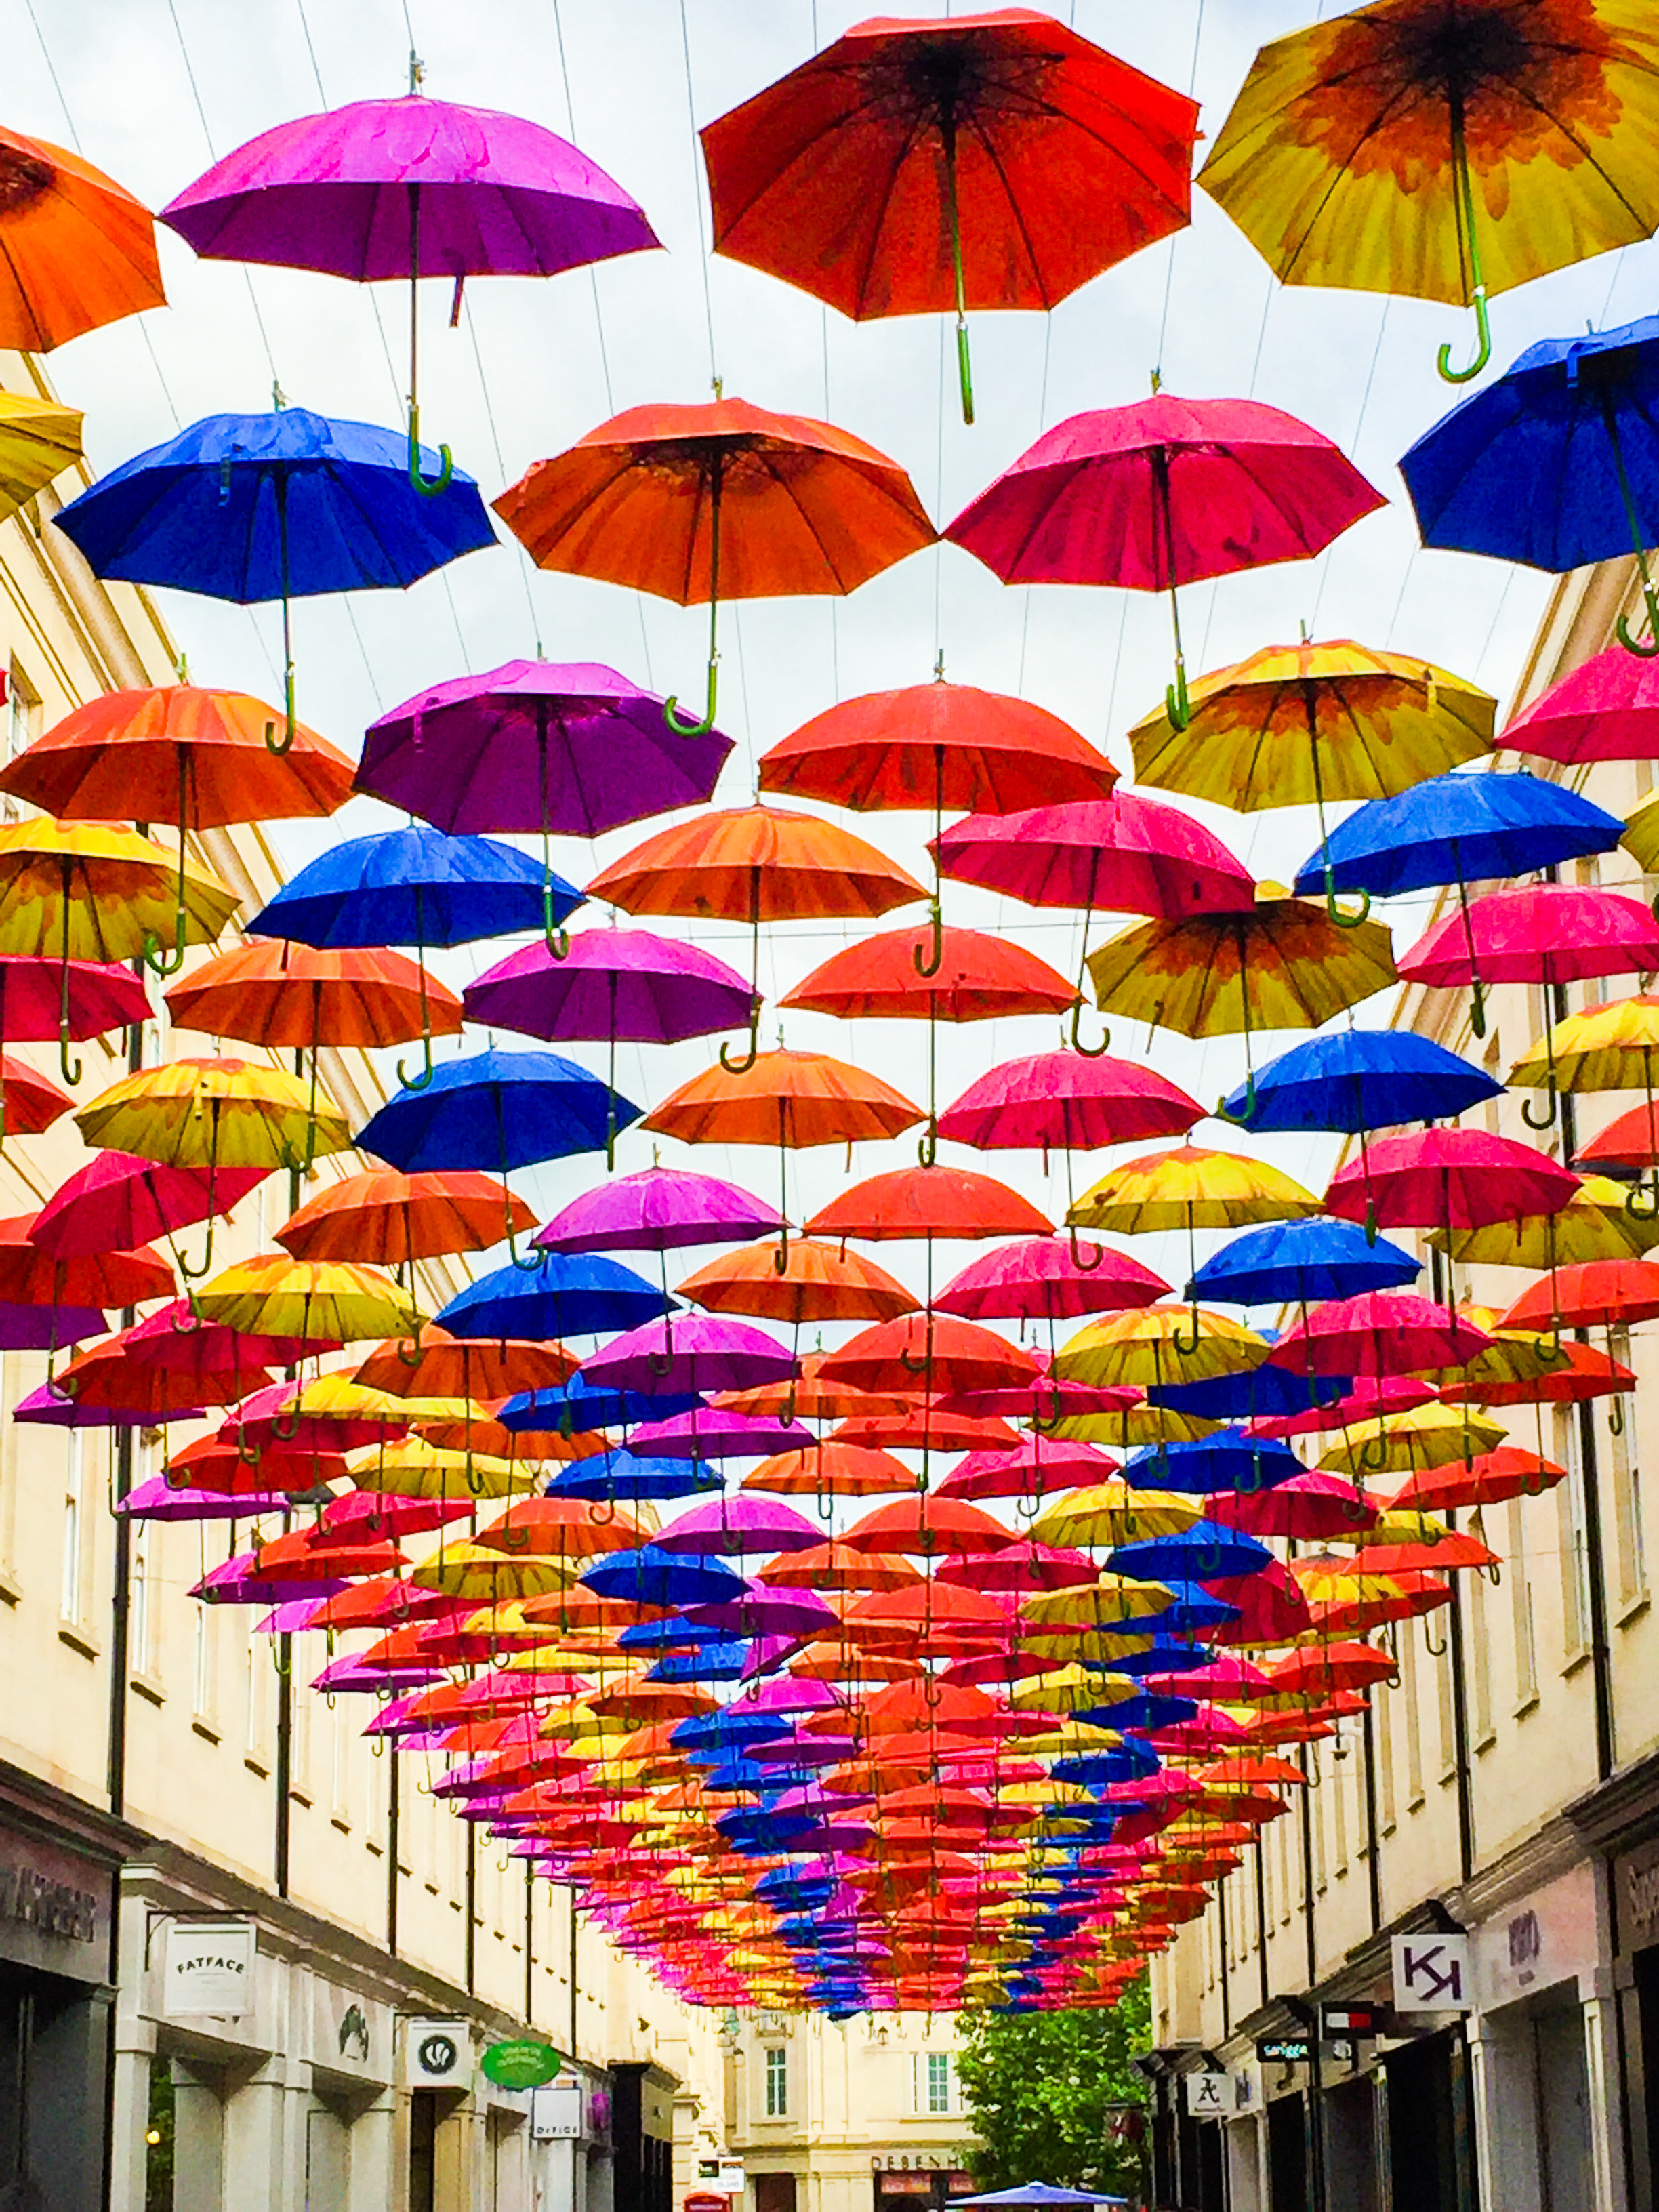 Umbrella Street in Bath